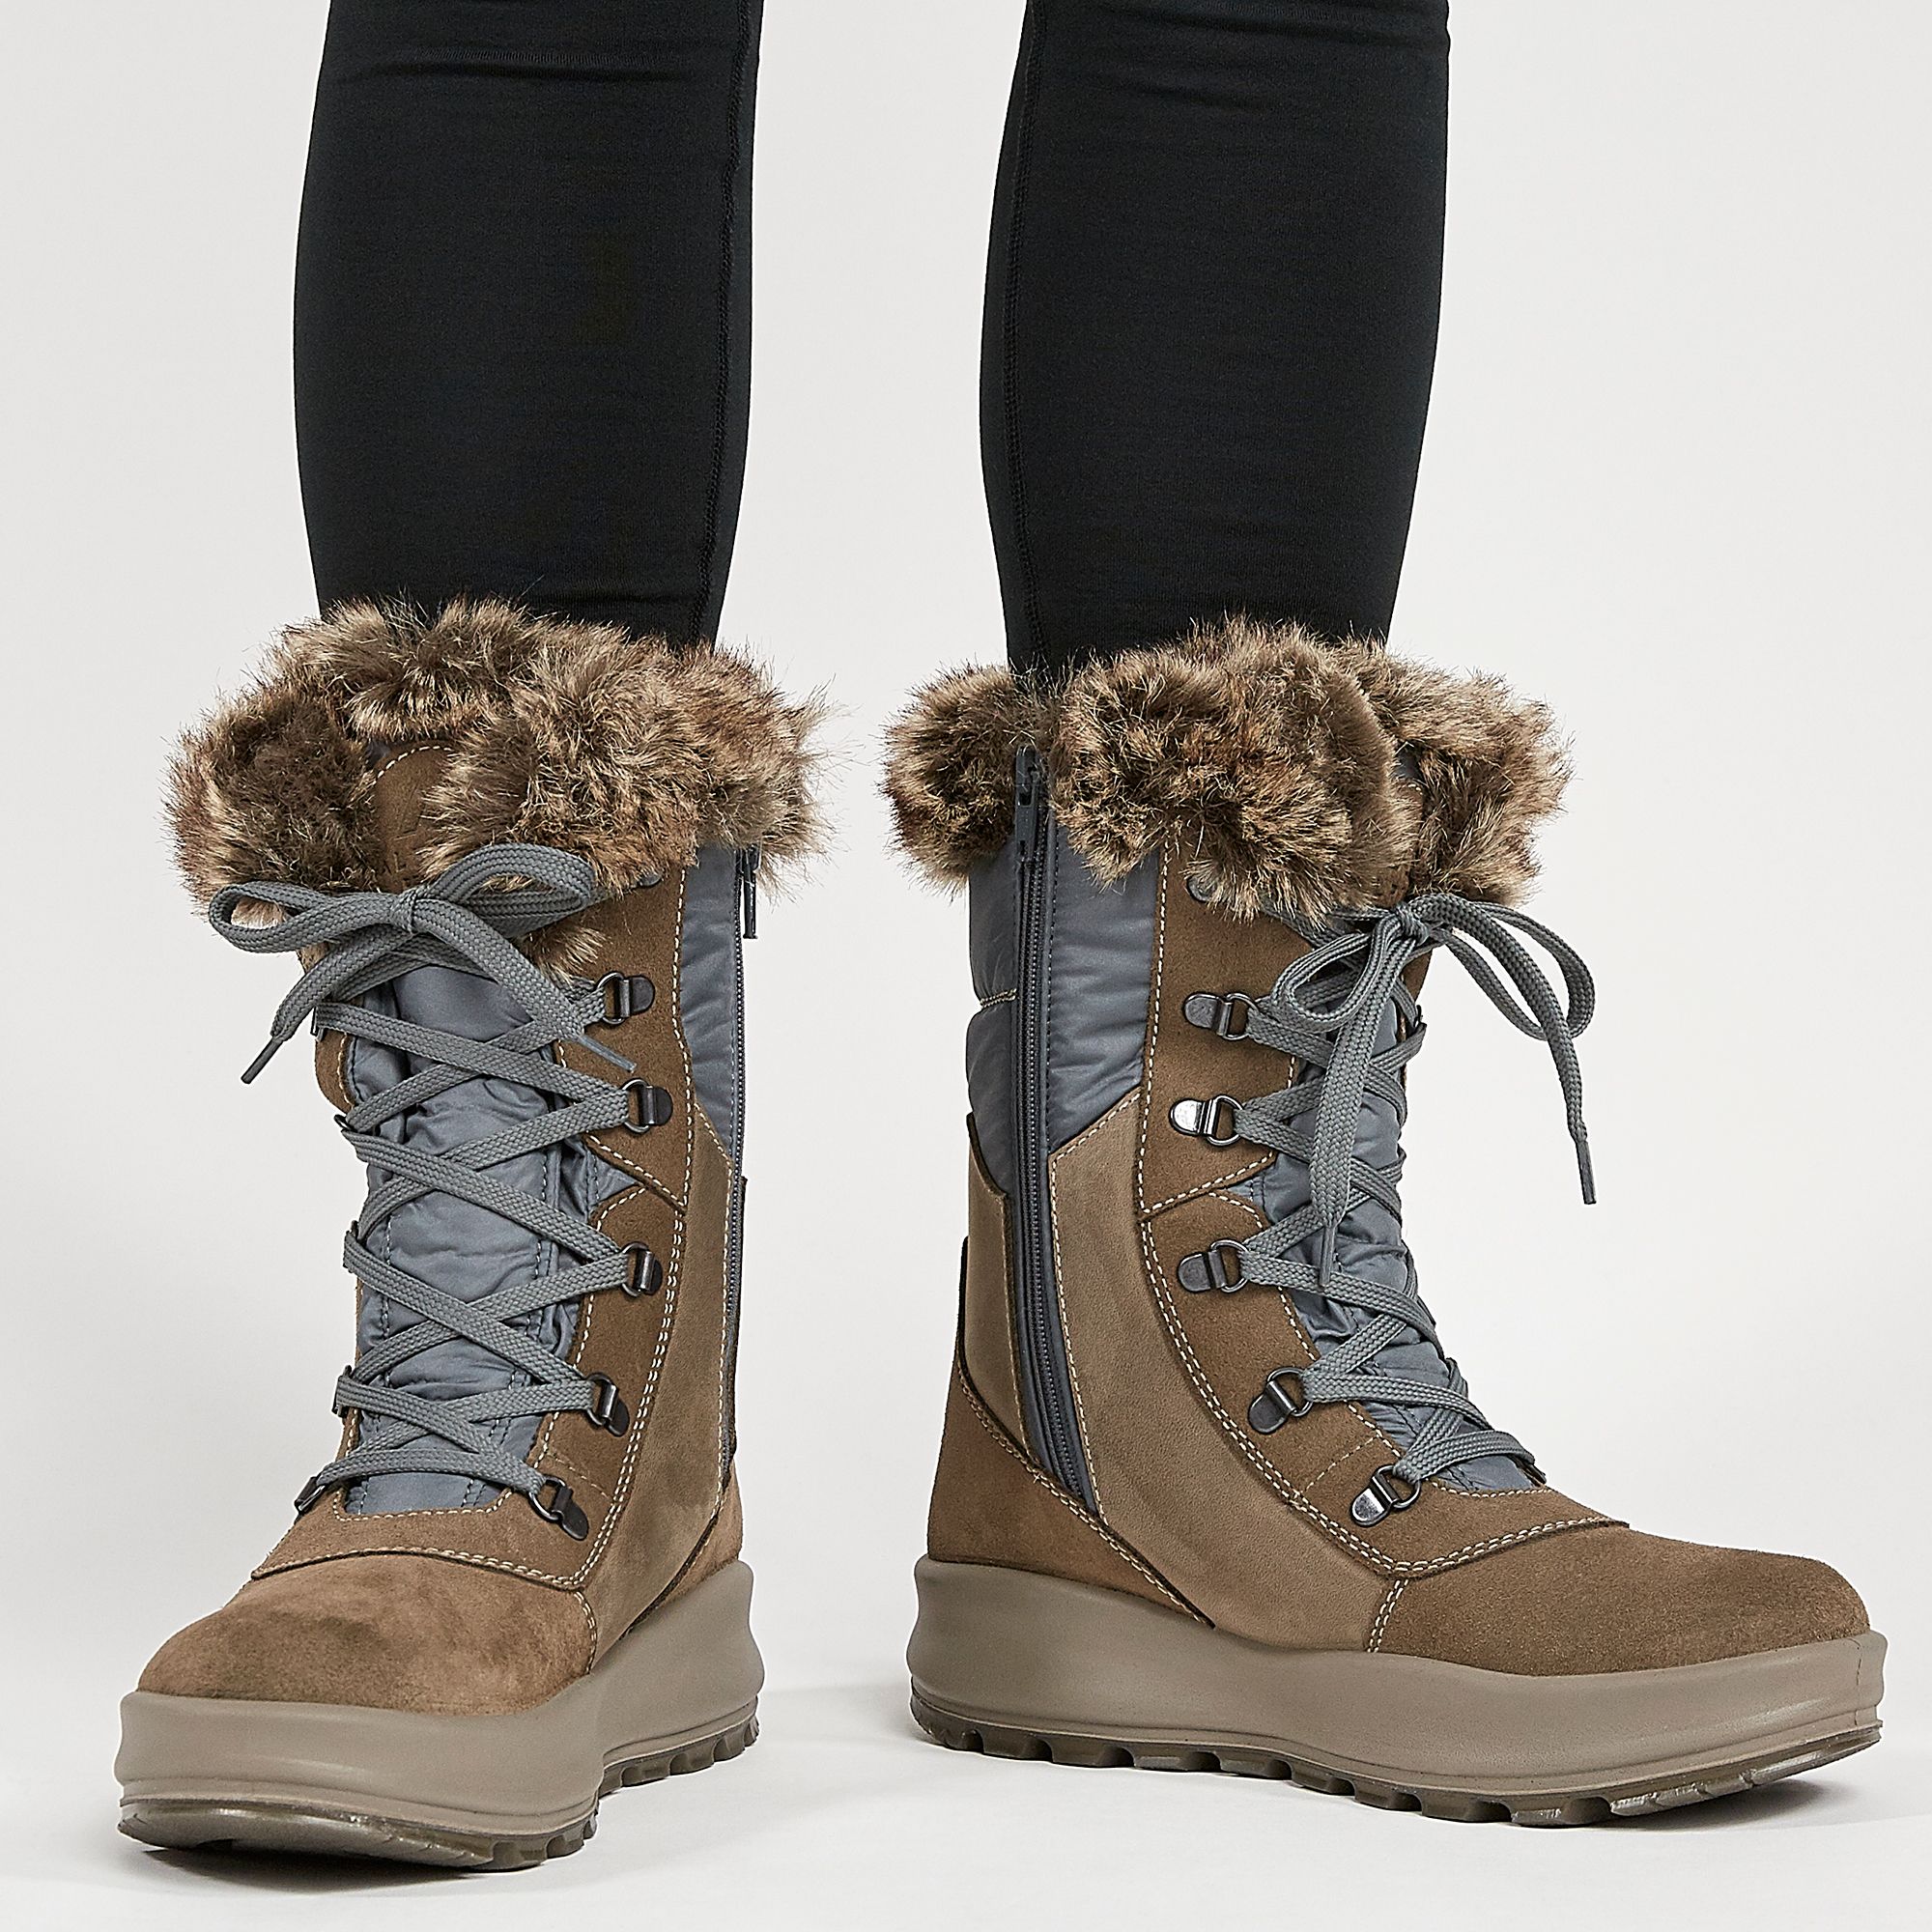 Alpine Design Women's Sofia Waterproof Winter Boots - Big Apple Buddy